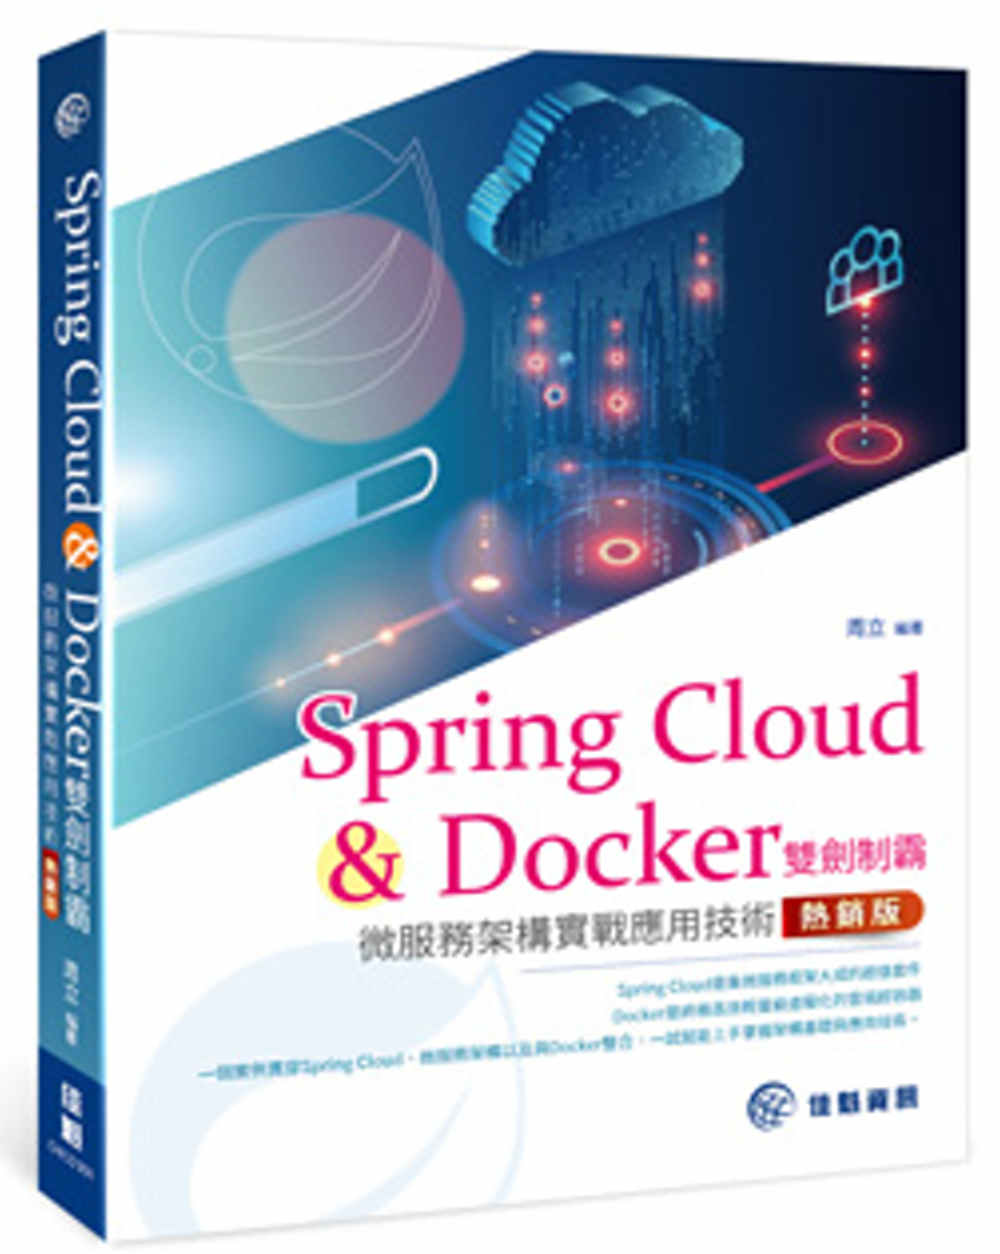 Spring Cloud & Docker雙劍制霸-微服務架構實戰應用技術（熱銷版）